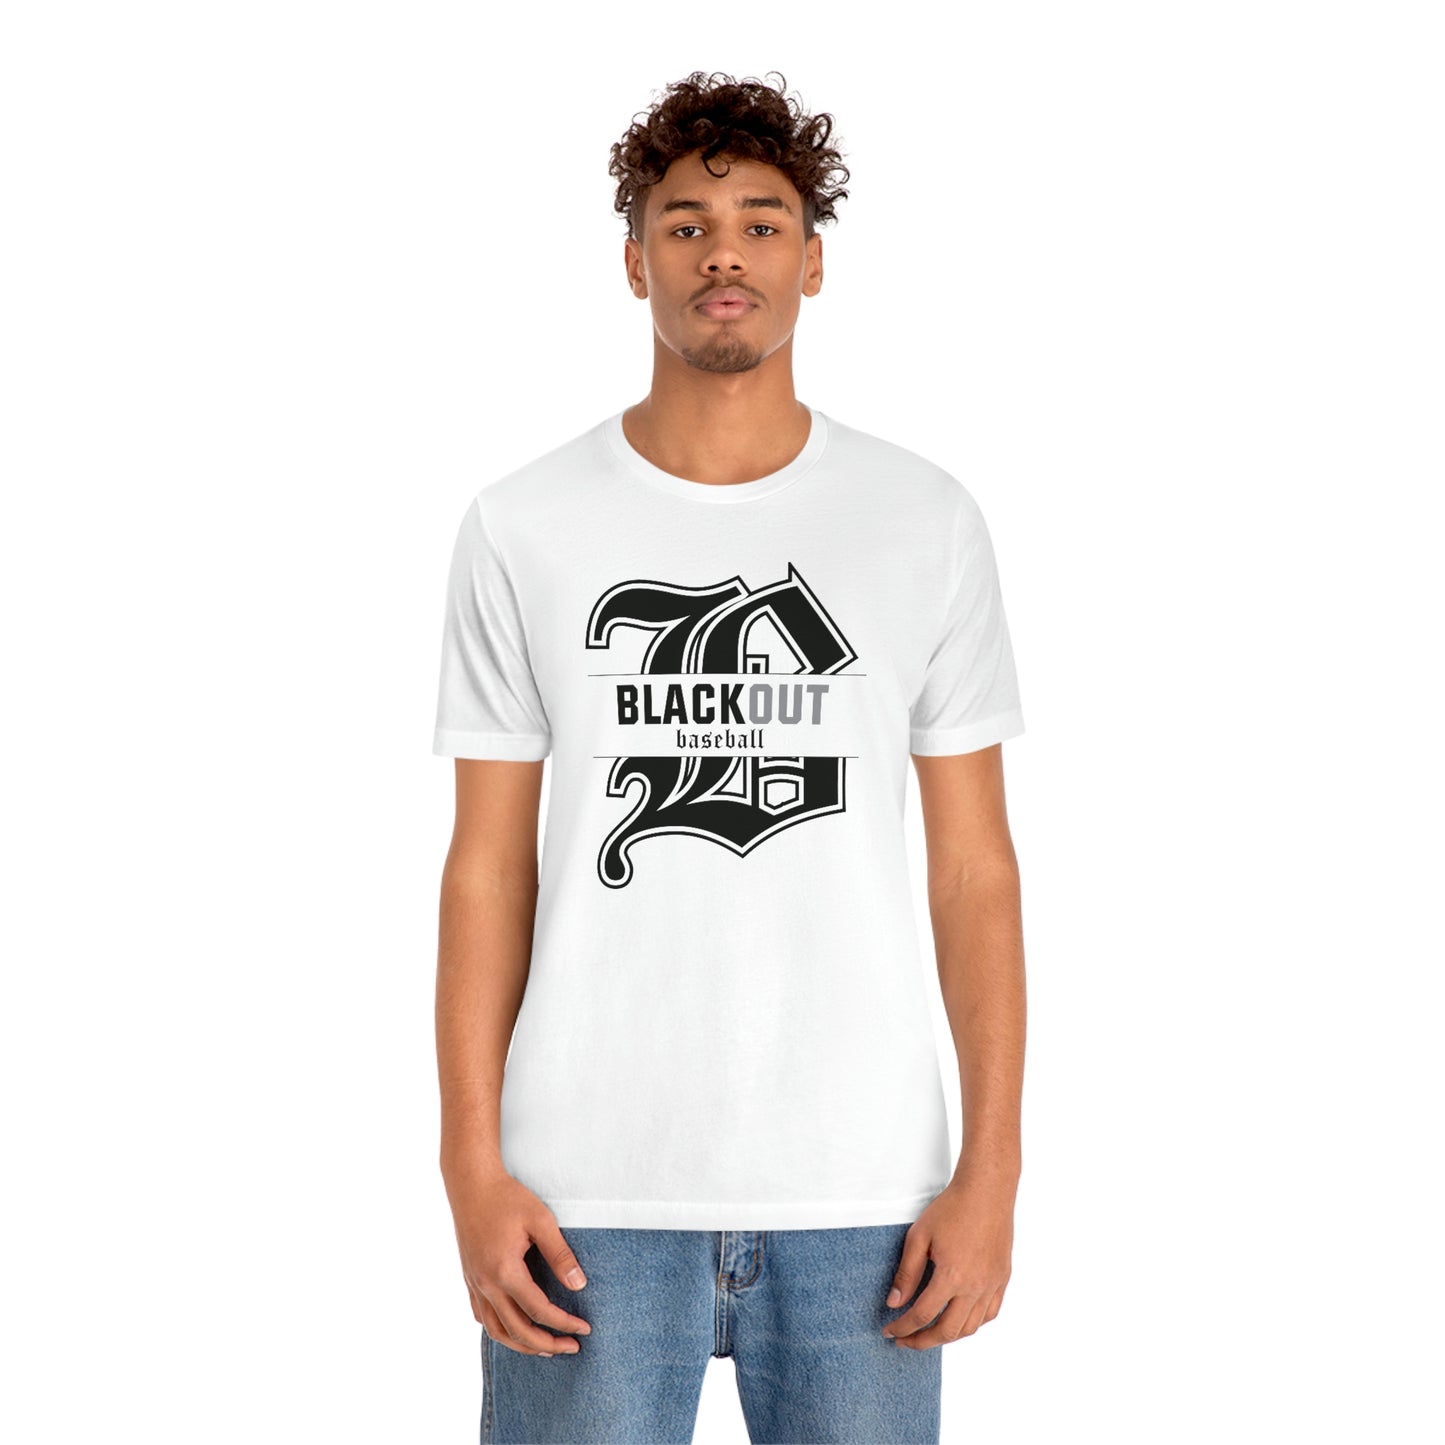 ADULT - "Blackout Baseball" 100% Cotton T-Shirt - (Black, White, or Gray)